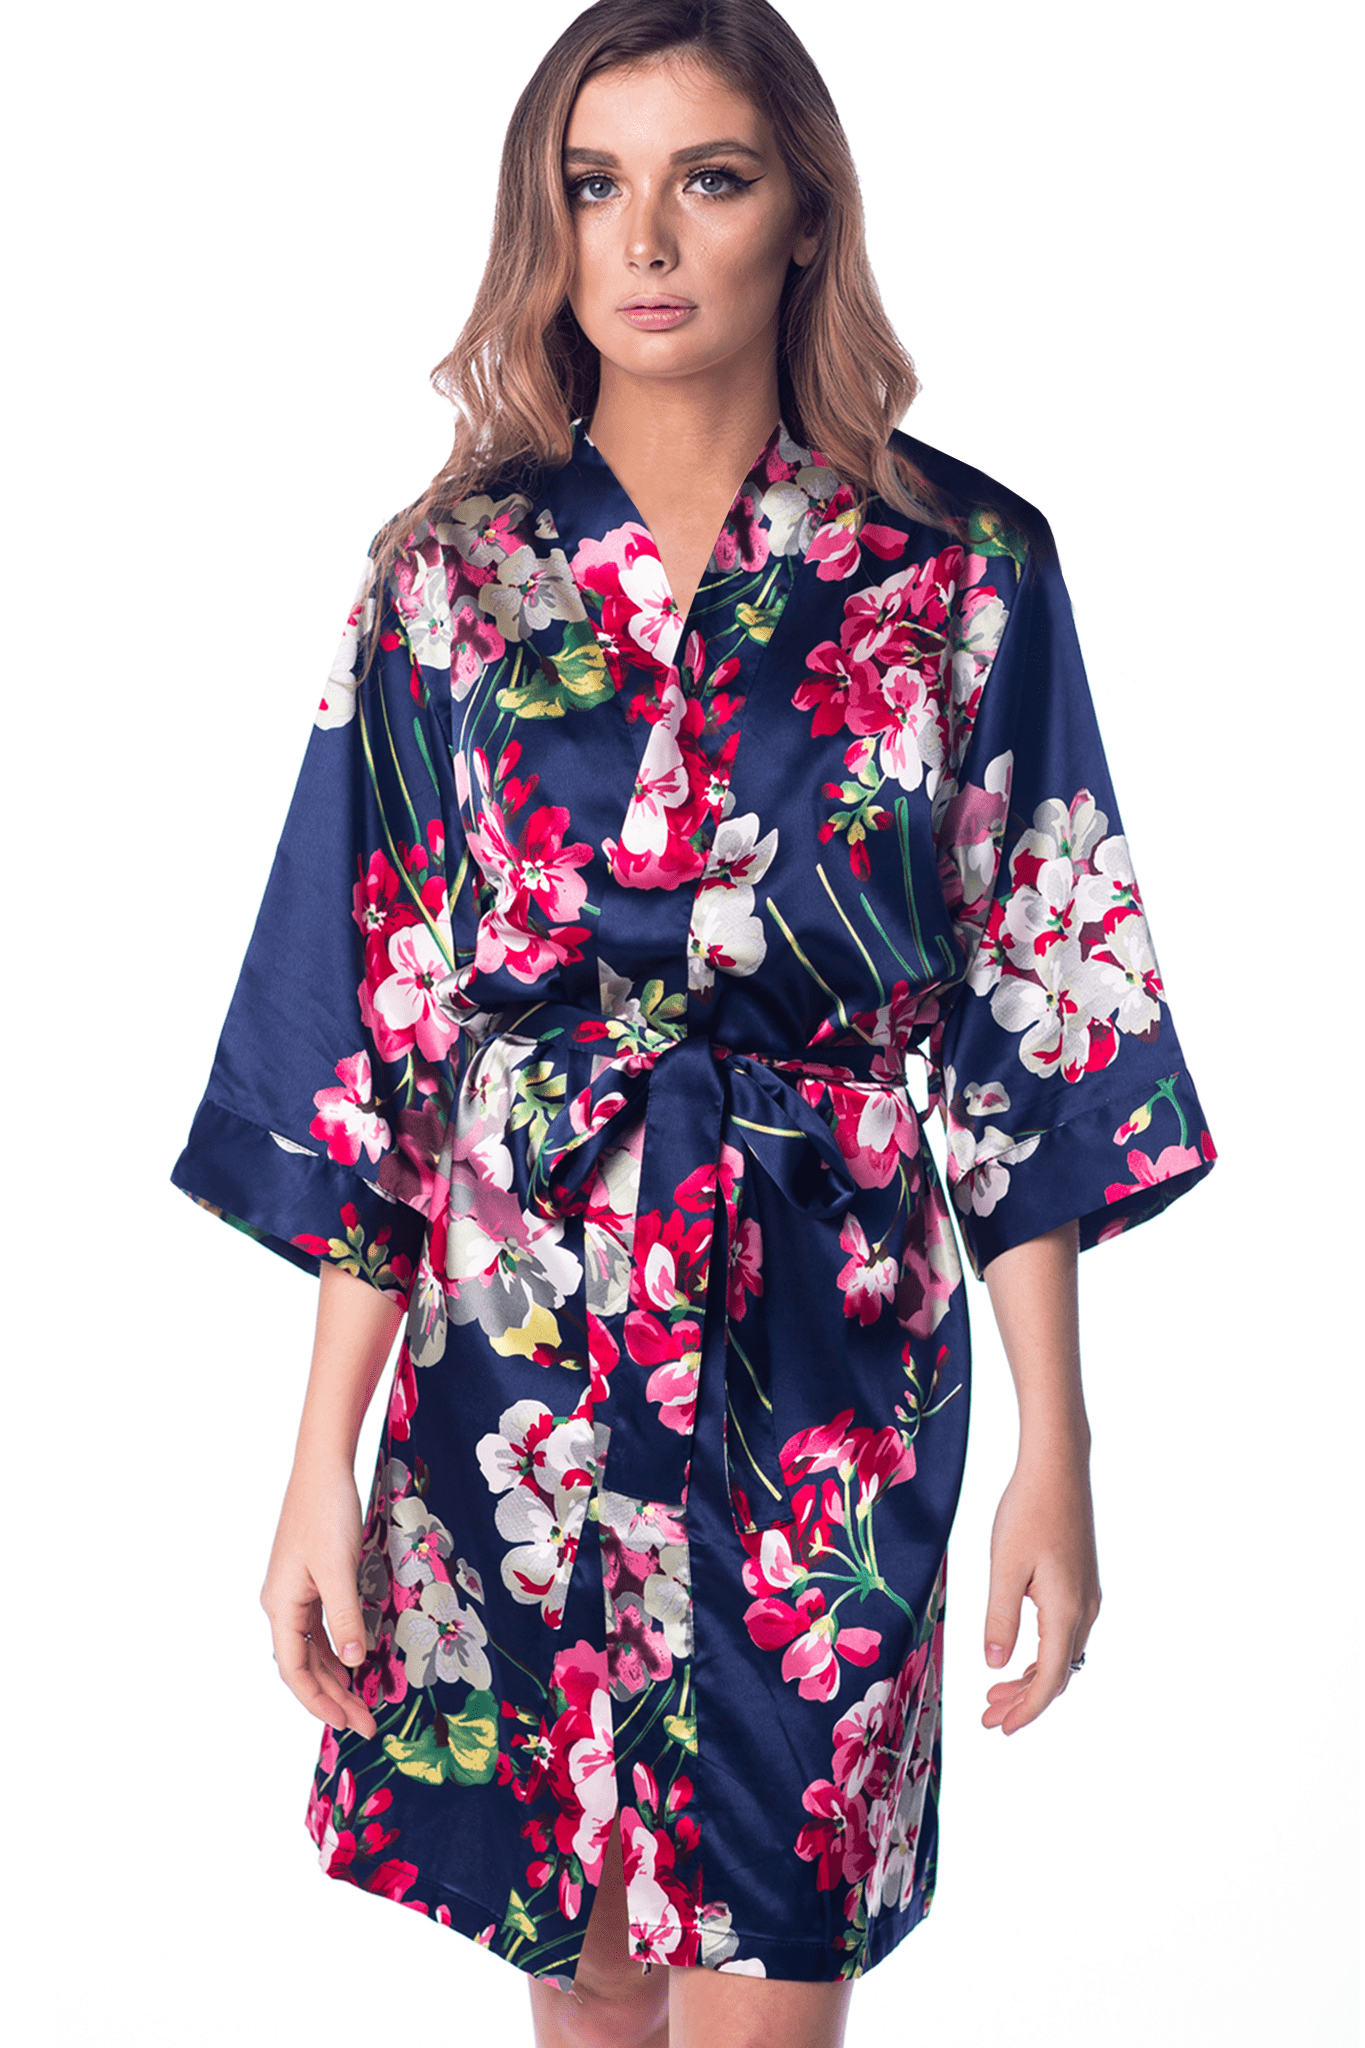 Pretty Robes - Women’s Floral Satin Silky Robe Kimono for Bride ...